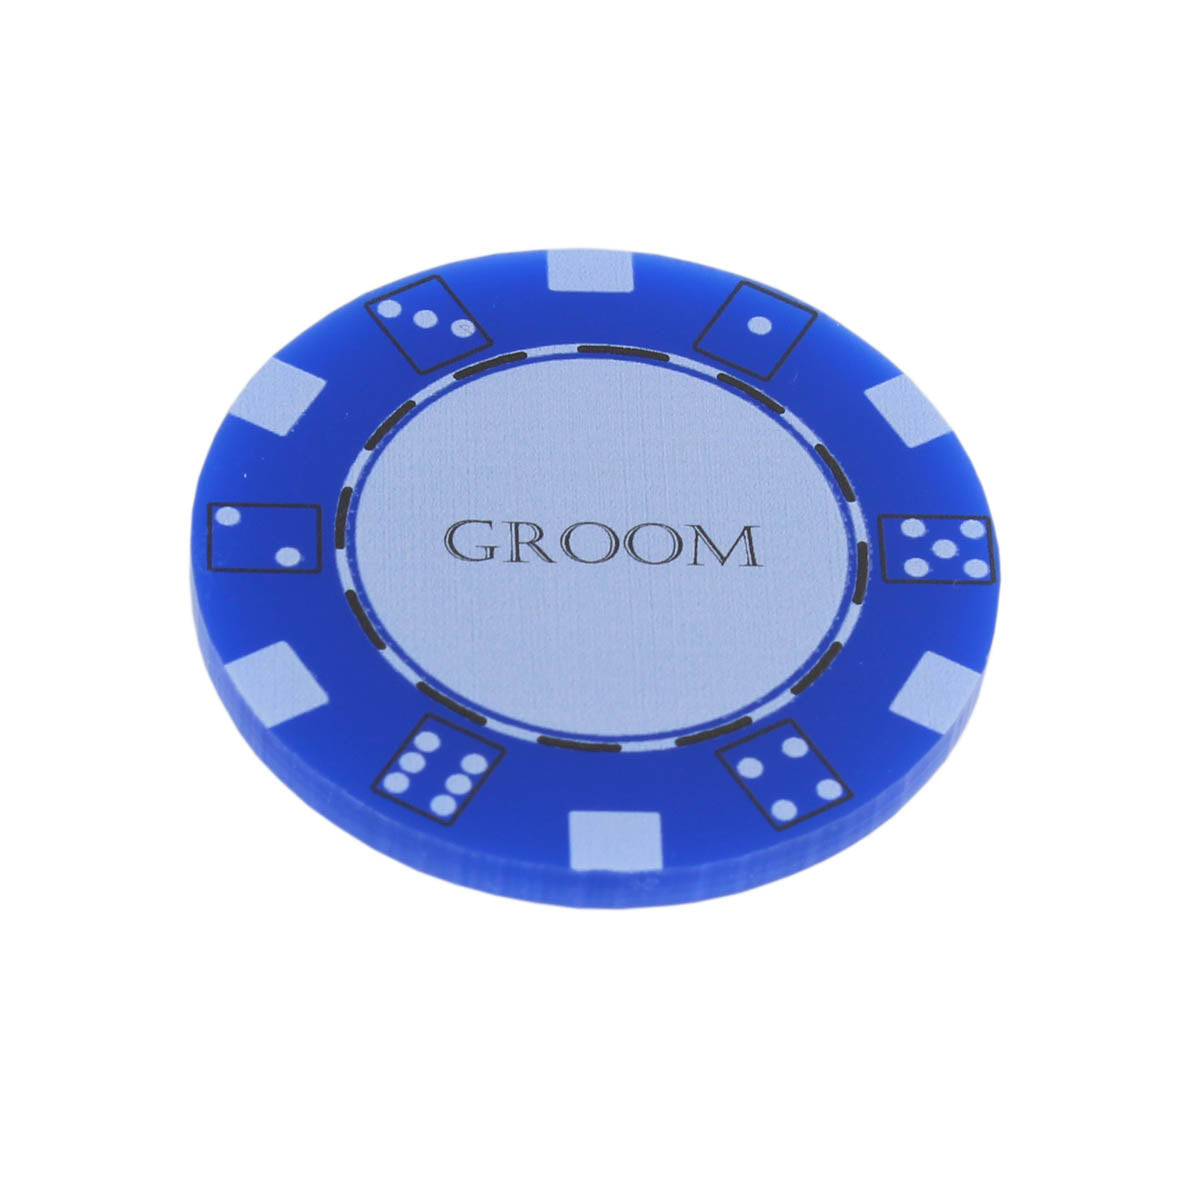 Poker Chip Place Names Wedding Casino Las Vegas Party Decor - 1 Poker Chip